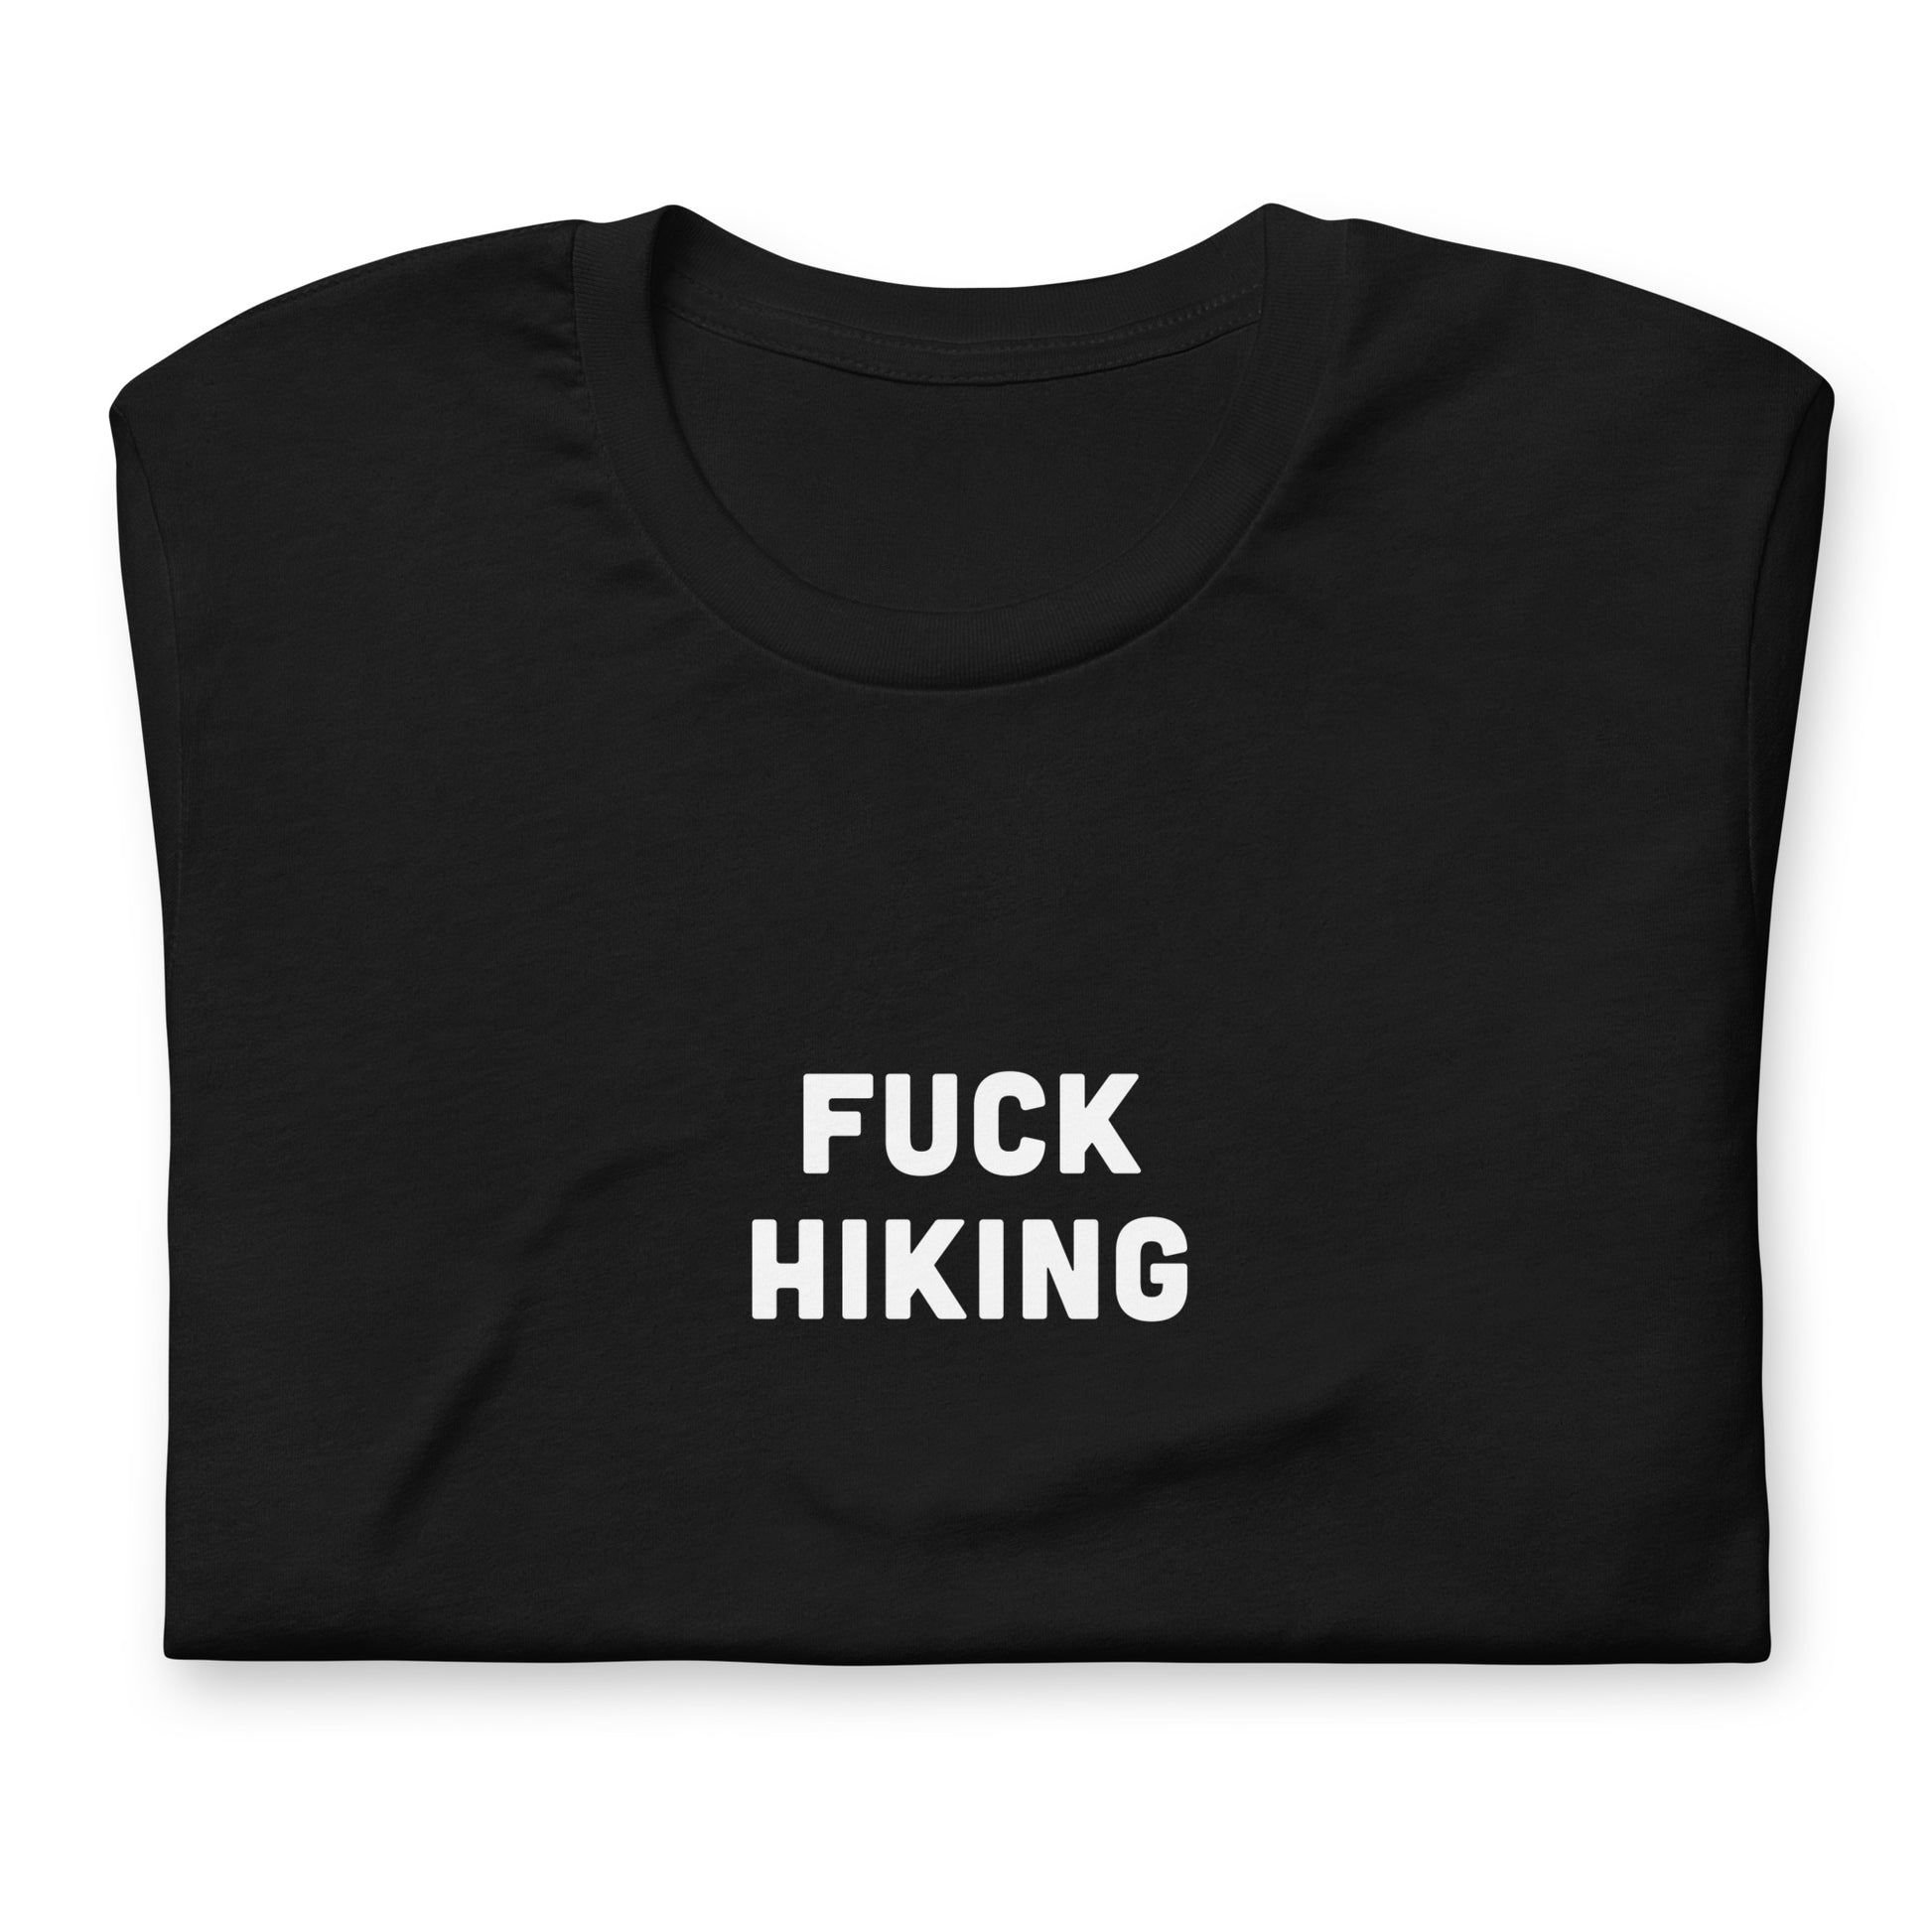 Fuck Hiking T-Shirt Size M Color Black